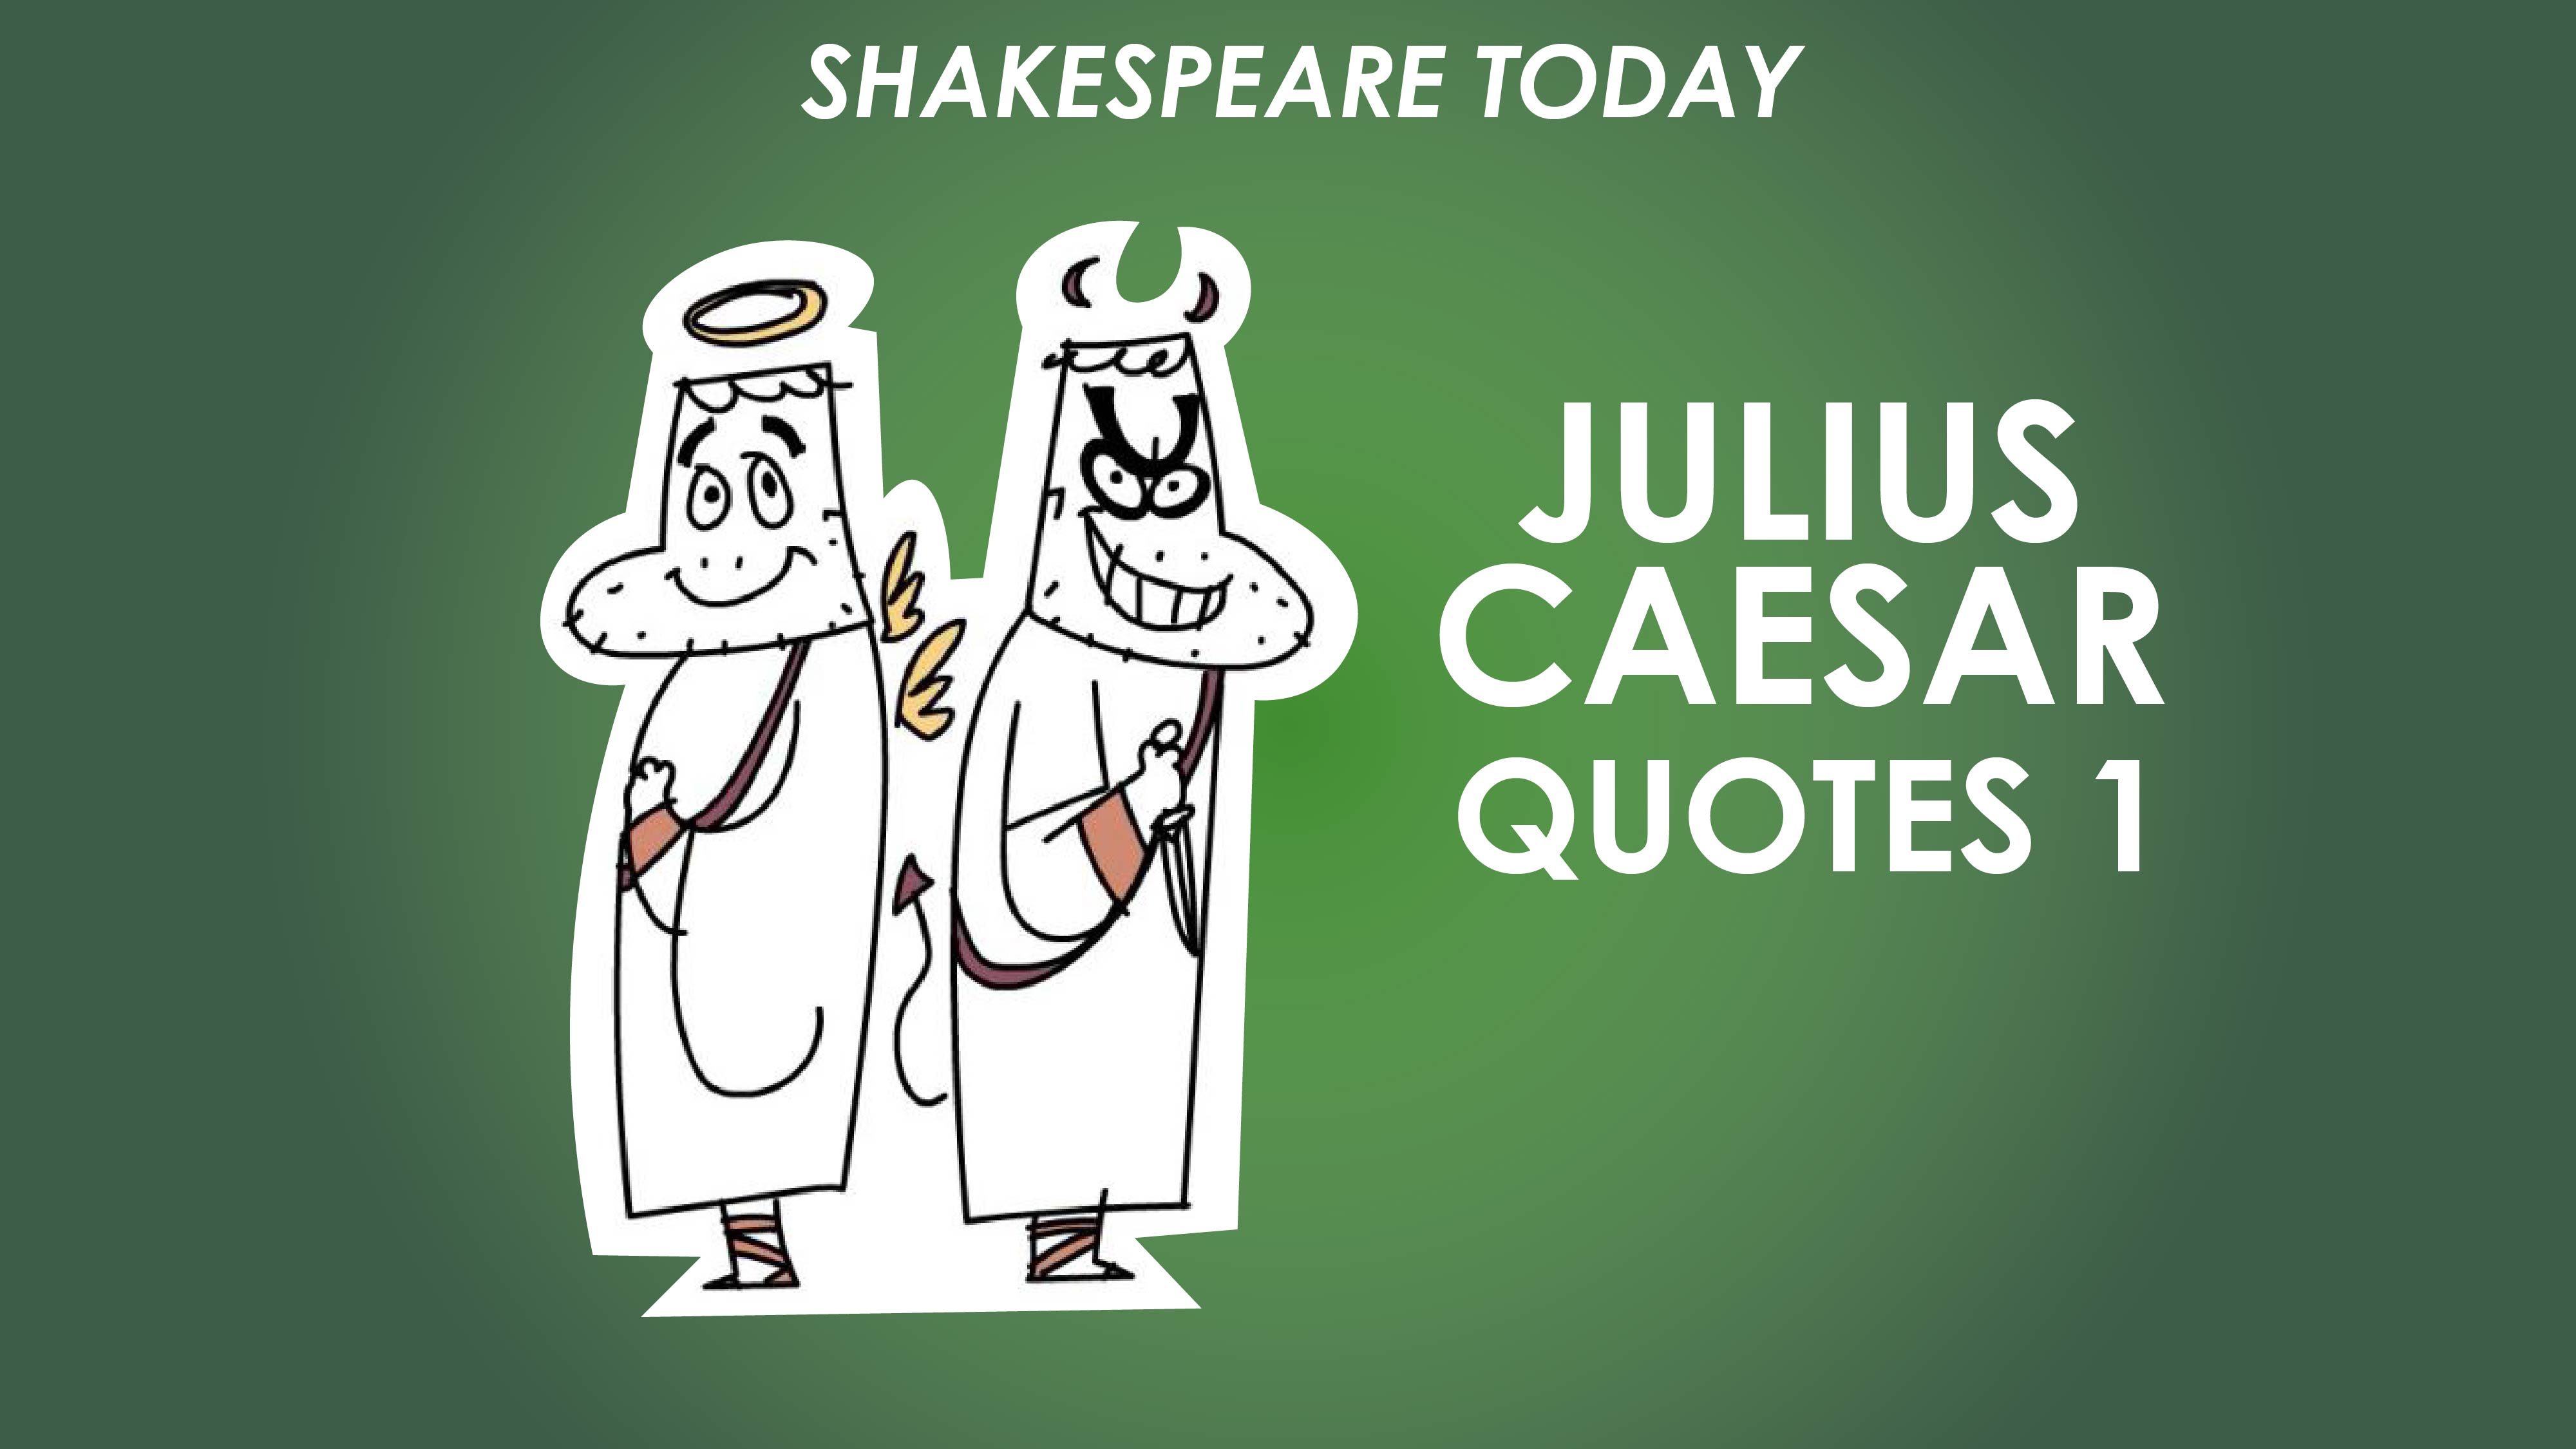 Julius Caesar Key Quotes Analysis Part 1 - Shakespeare Today Series